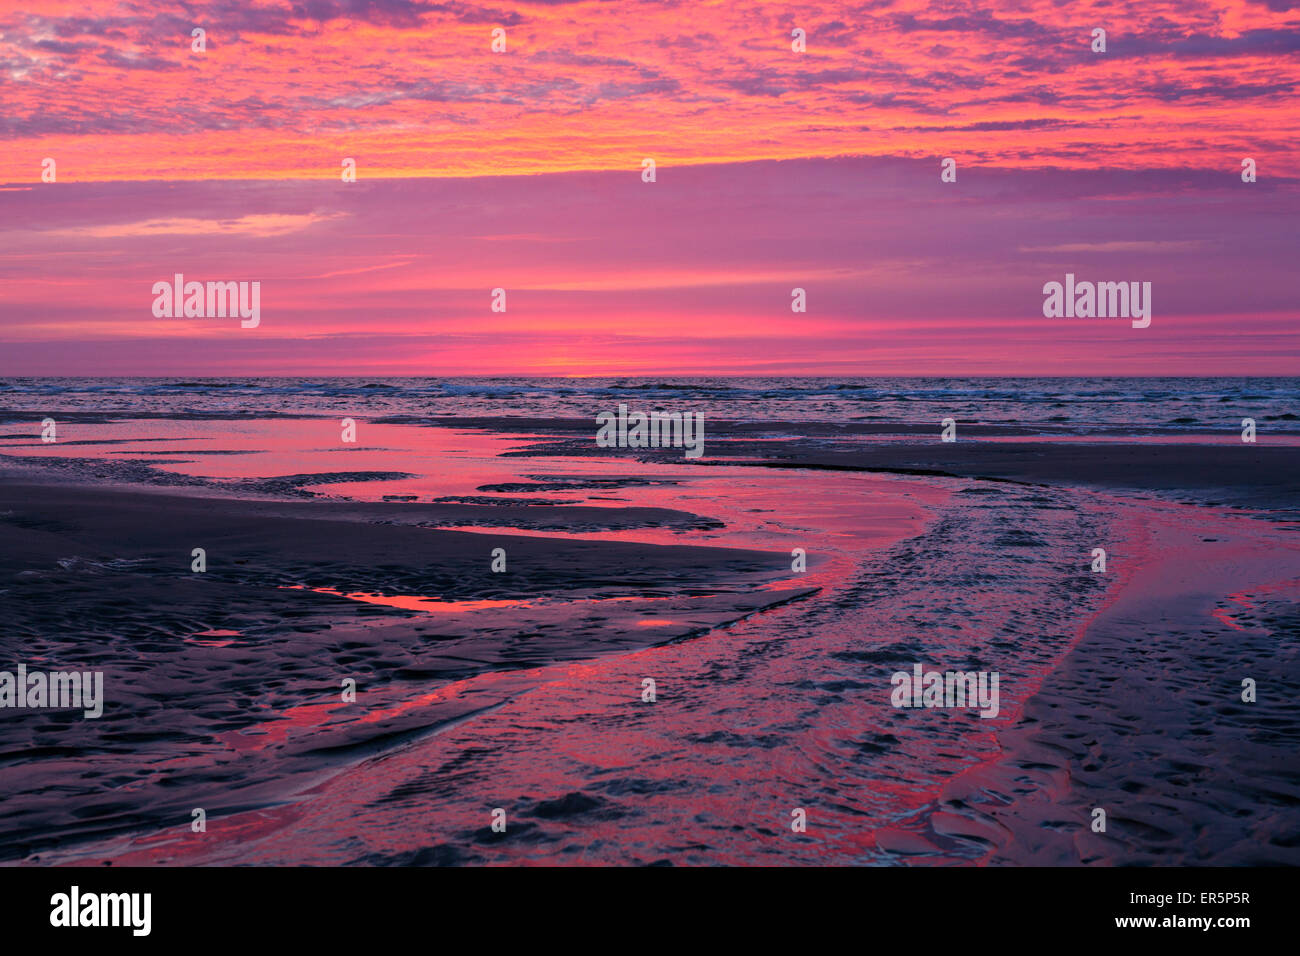 Beach at sunset, tidal channel, Juist Island, Nationalpark, North Sea, East Frisian Islands, National Park, Unesco World Heritag Stock Photo